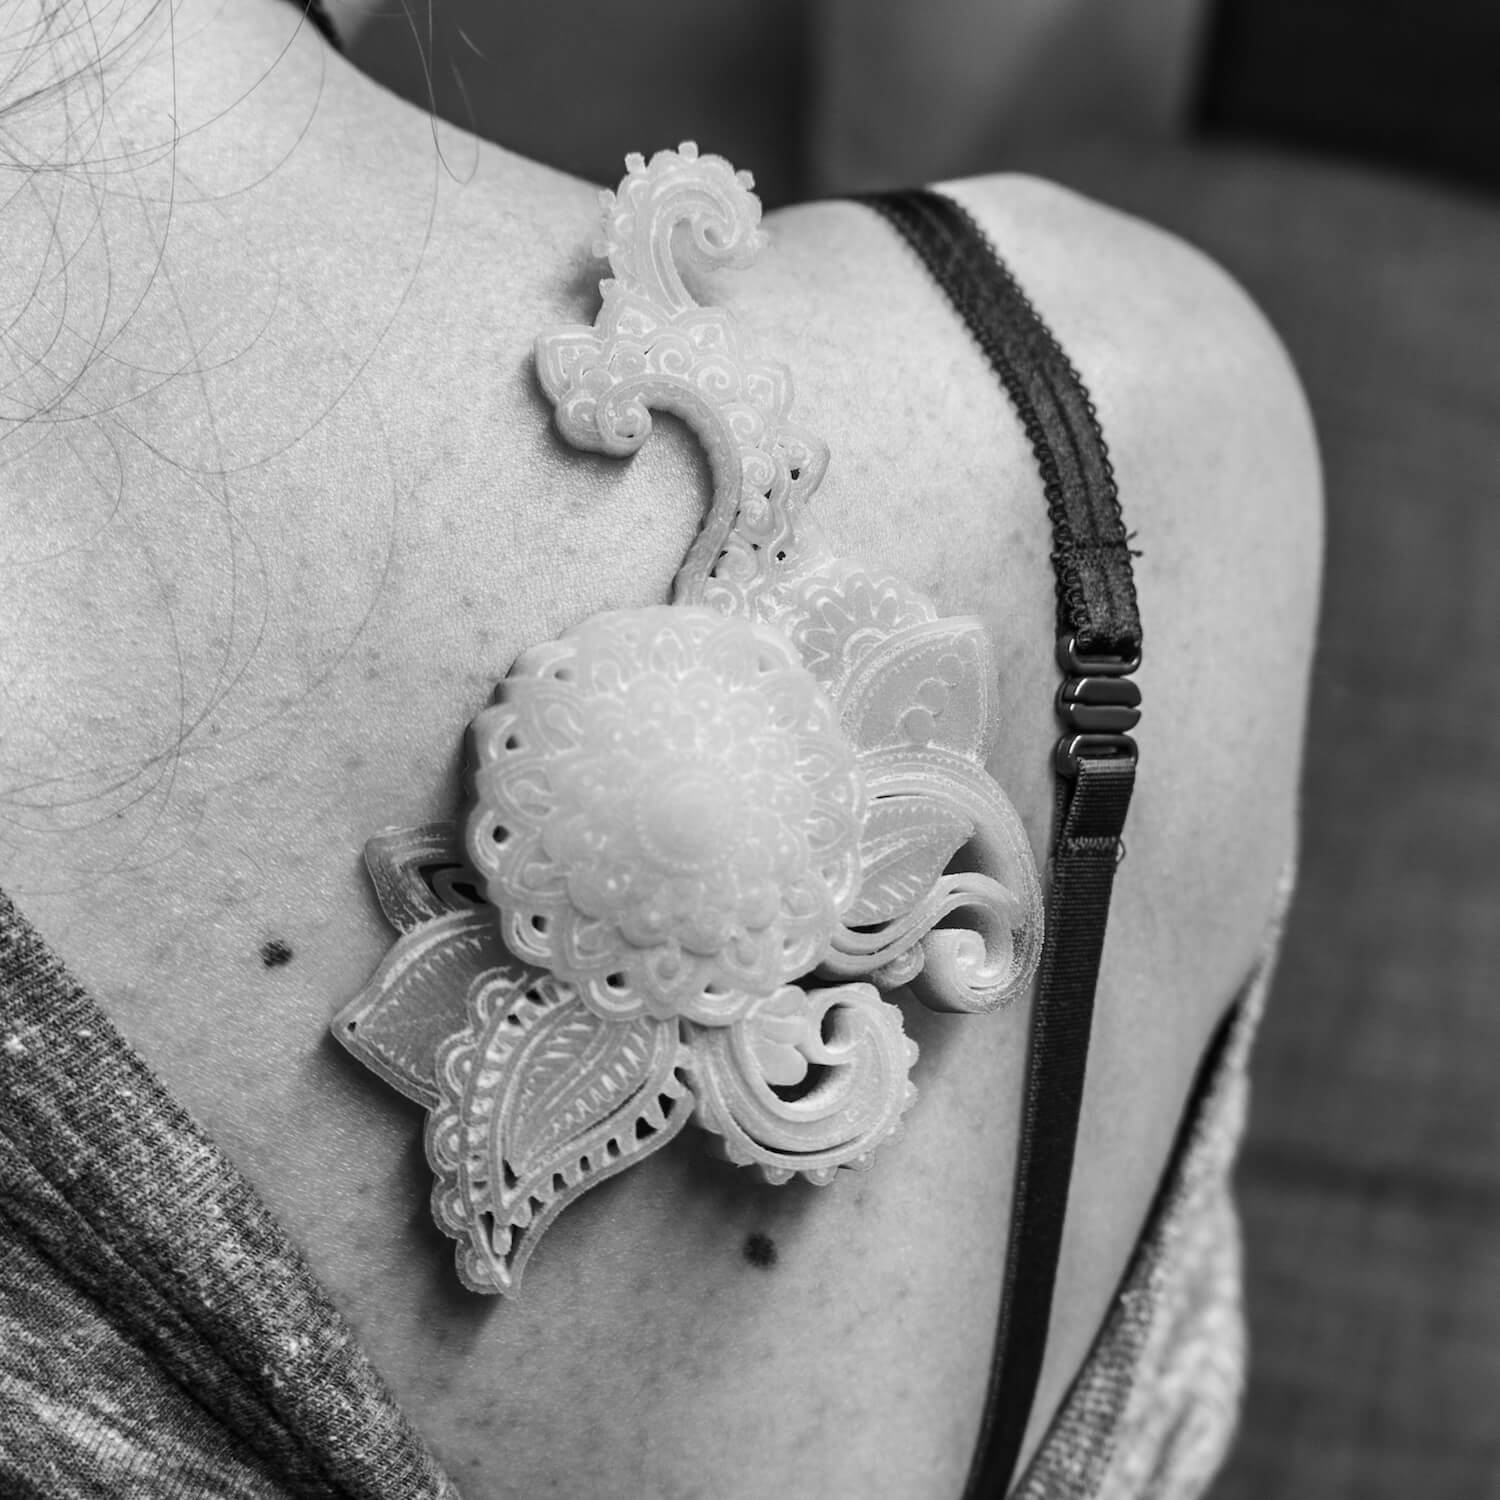 3D printed tattoo design by Jullien Nikolov